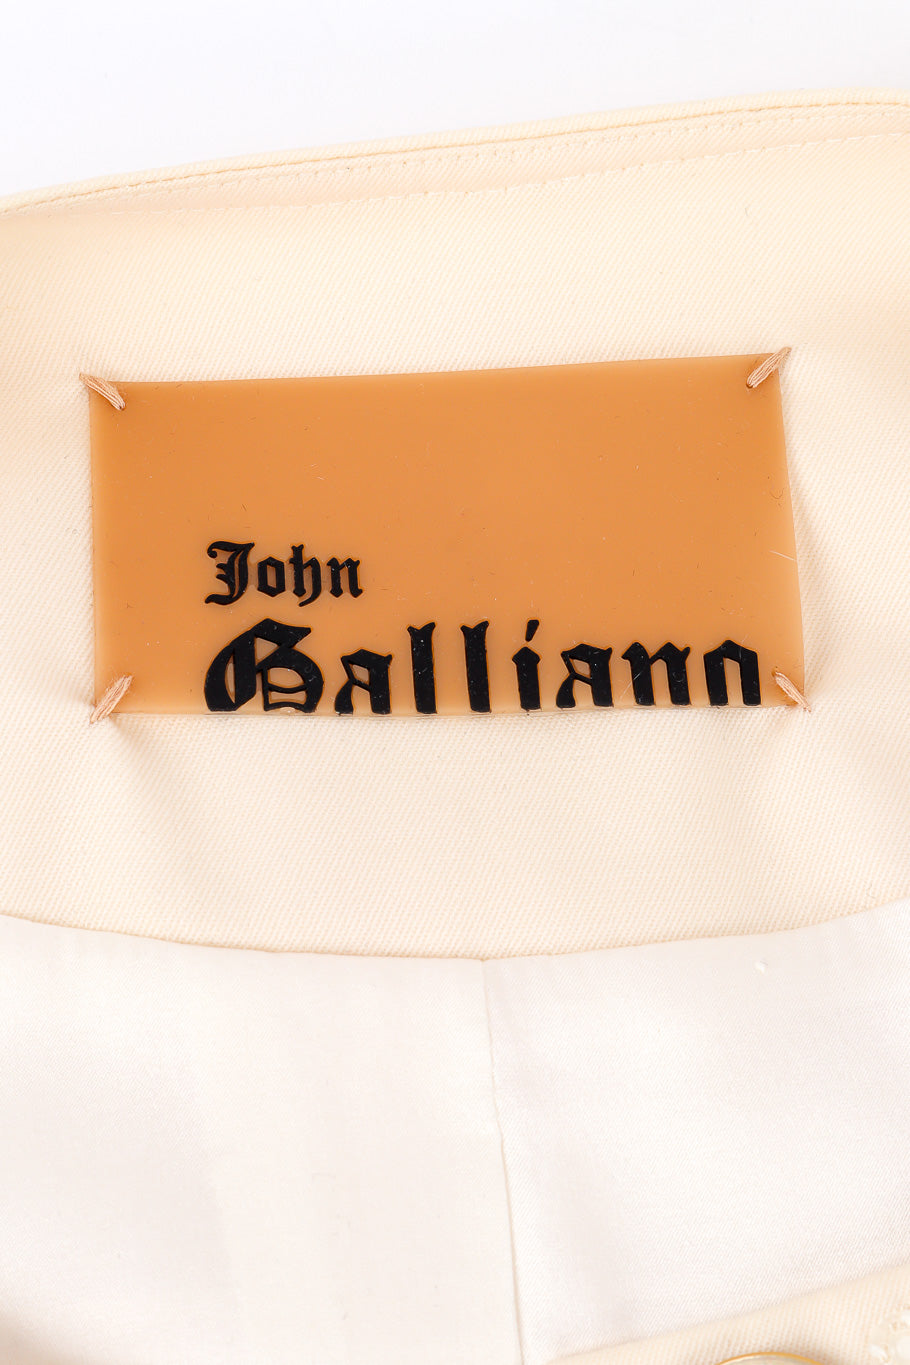 Skirt suit by John Galliano flat lay jacket label @recessla